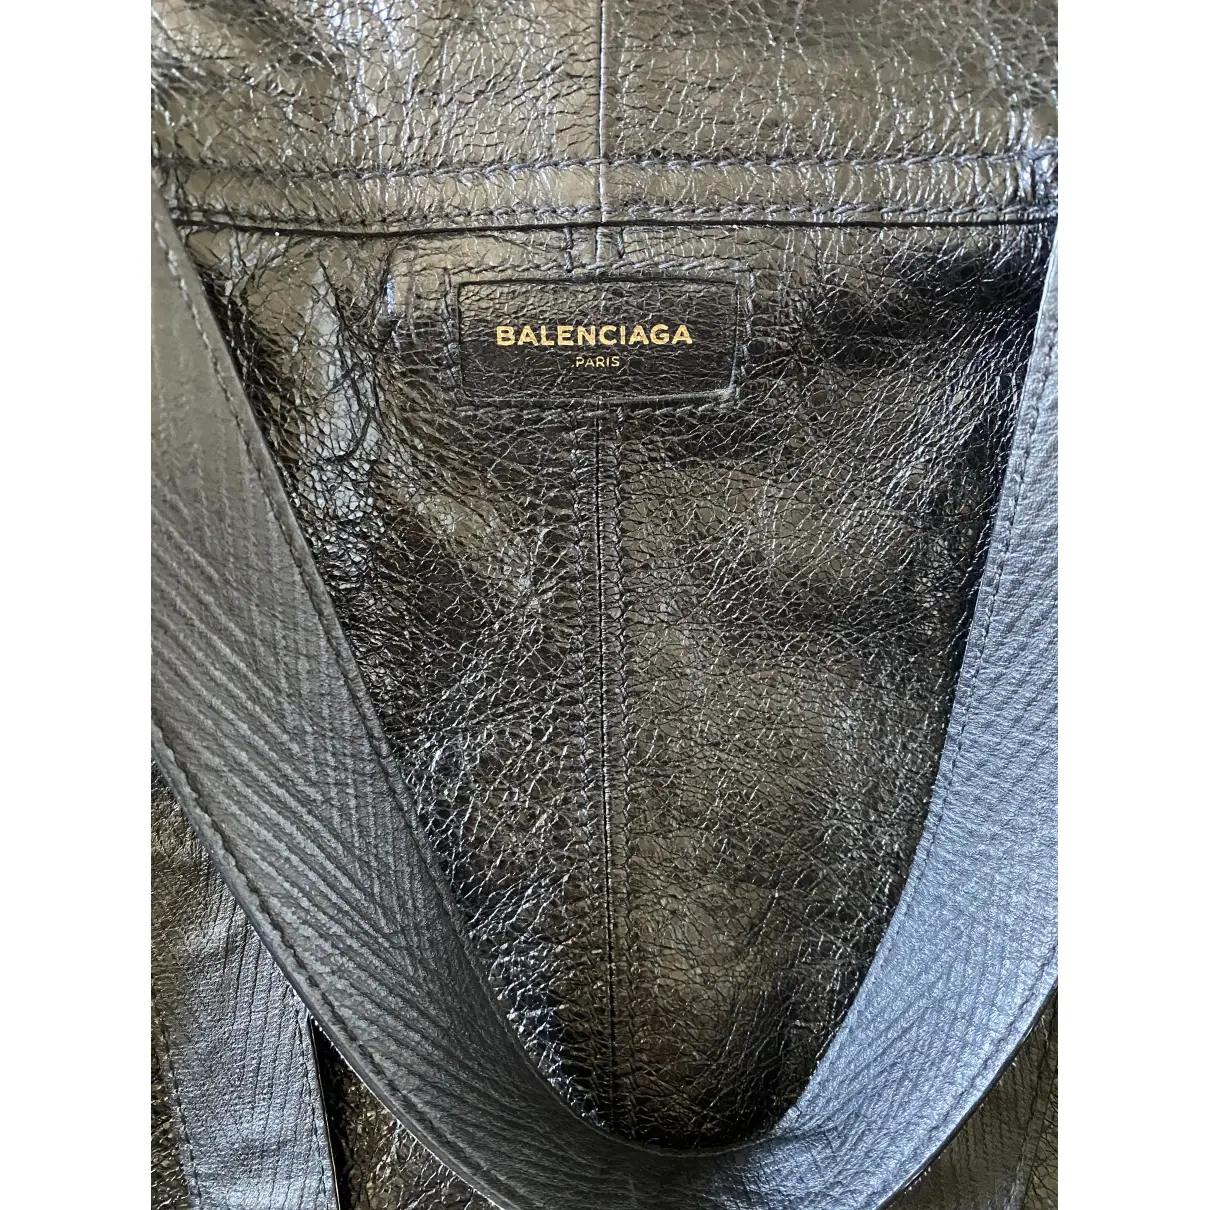 Buy Balenciaga Leather tote online